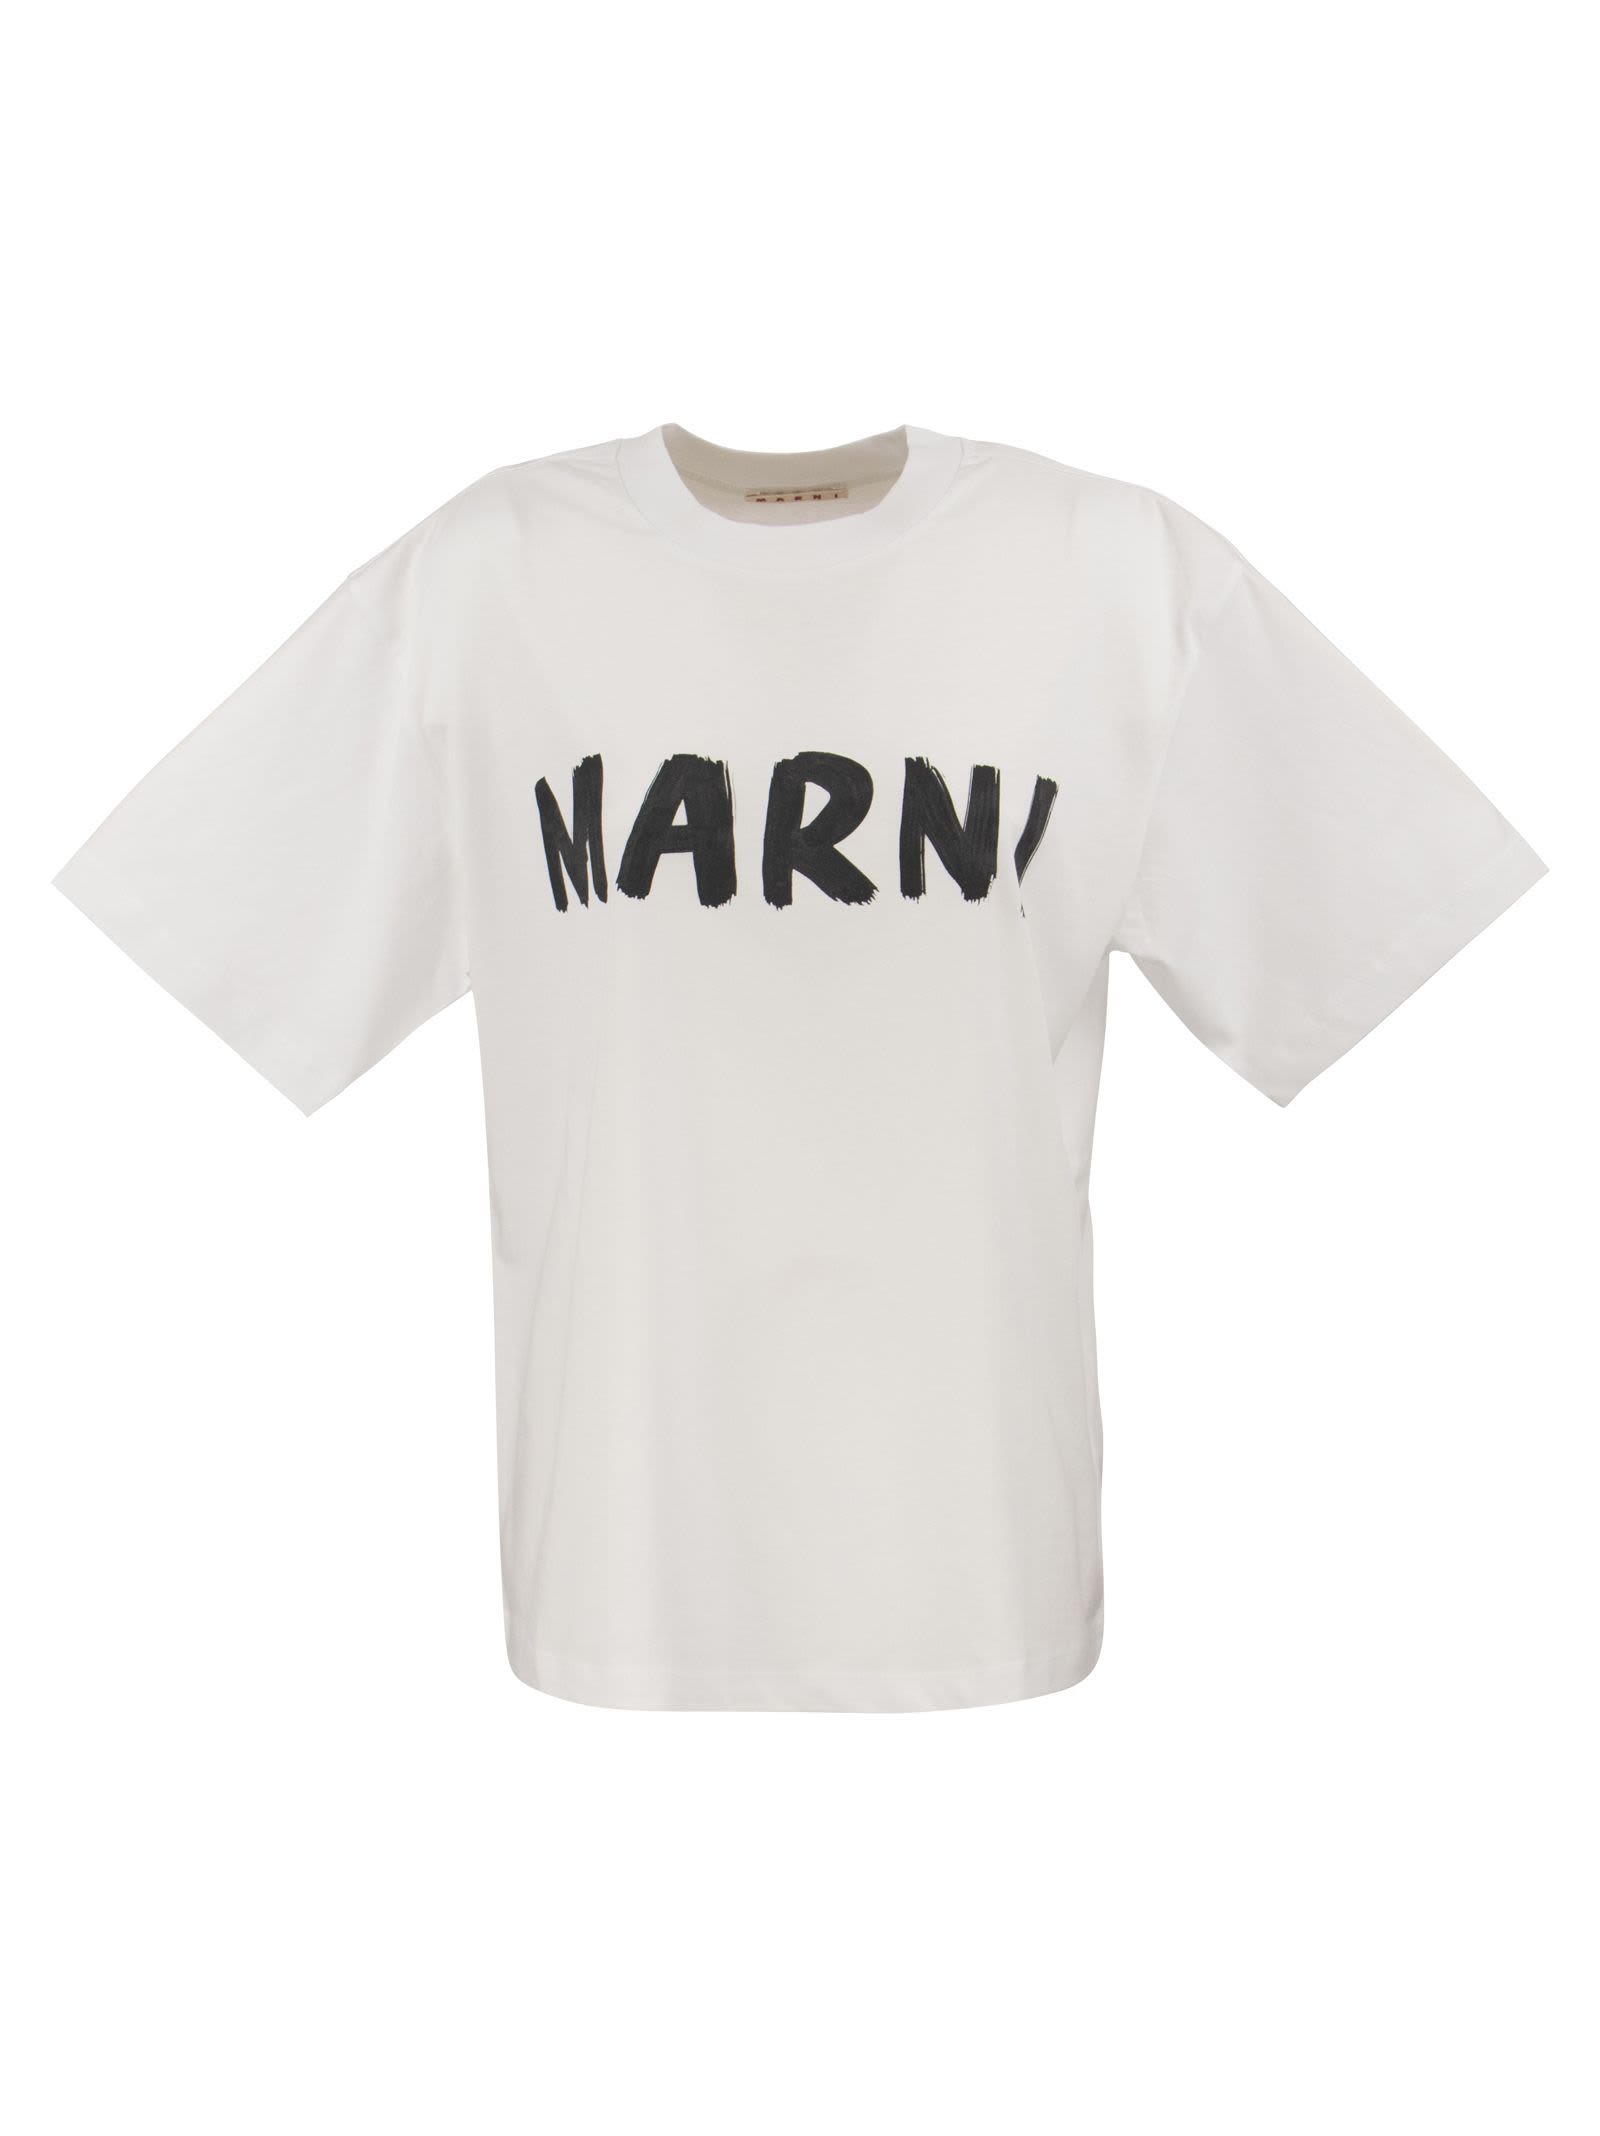 Marni Cotton Jersey T-shirt With Marni Print